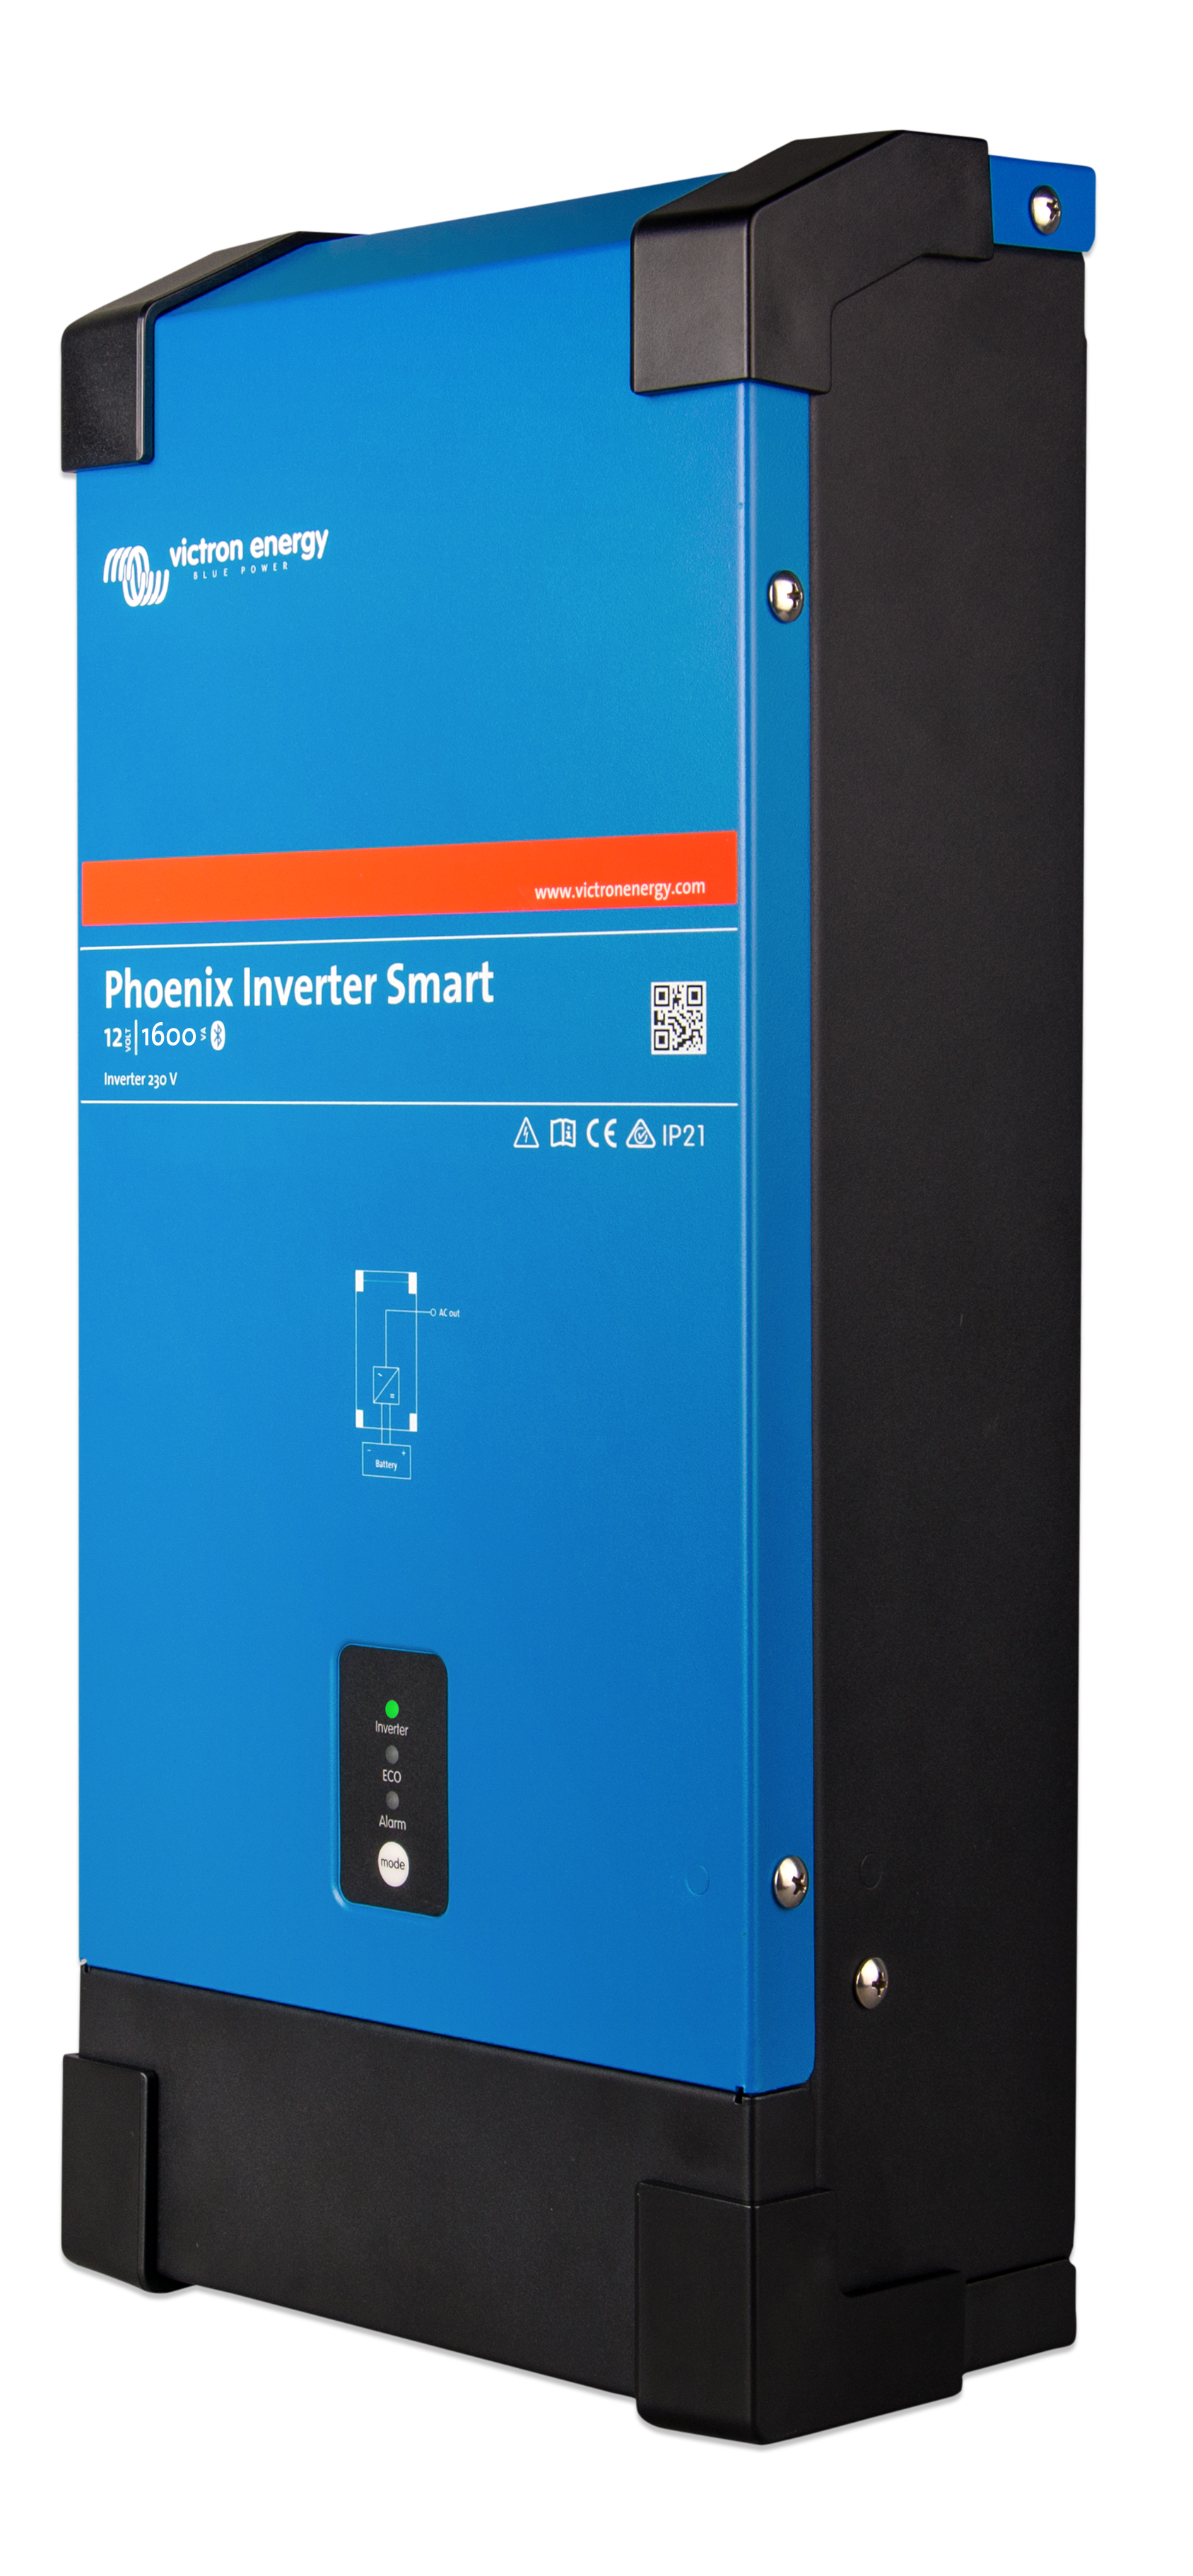 Victron Energy Phoenix Inverter 12V 1600VA Smart PIN122161000